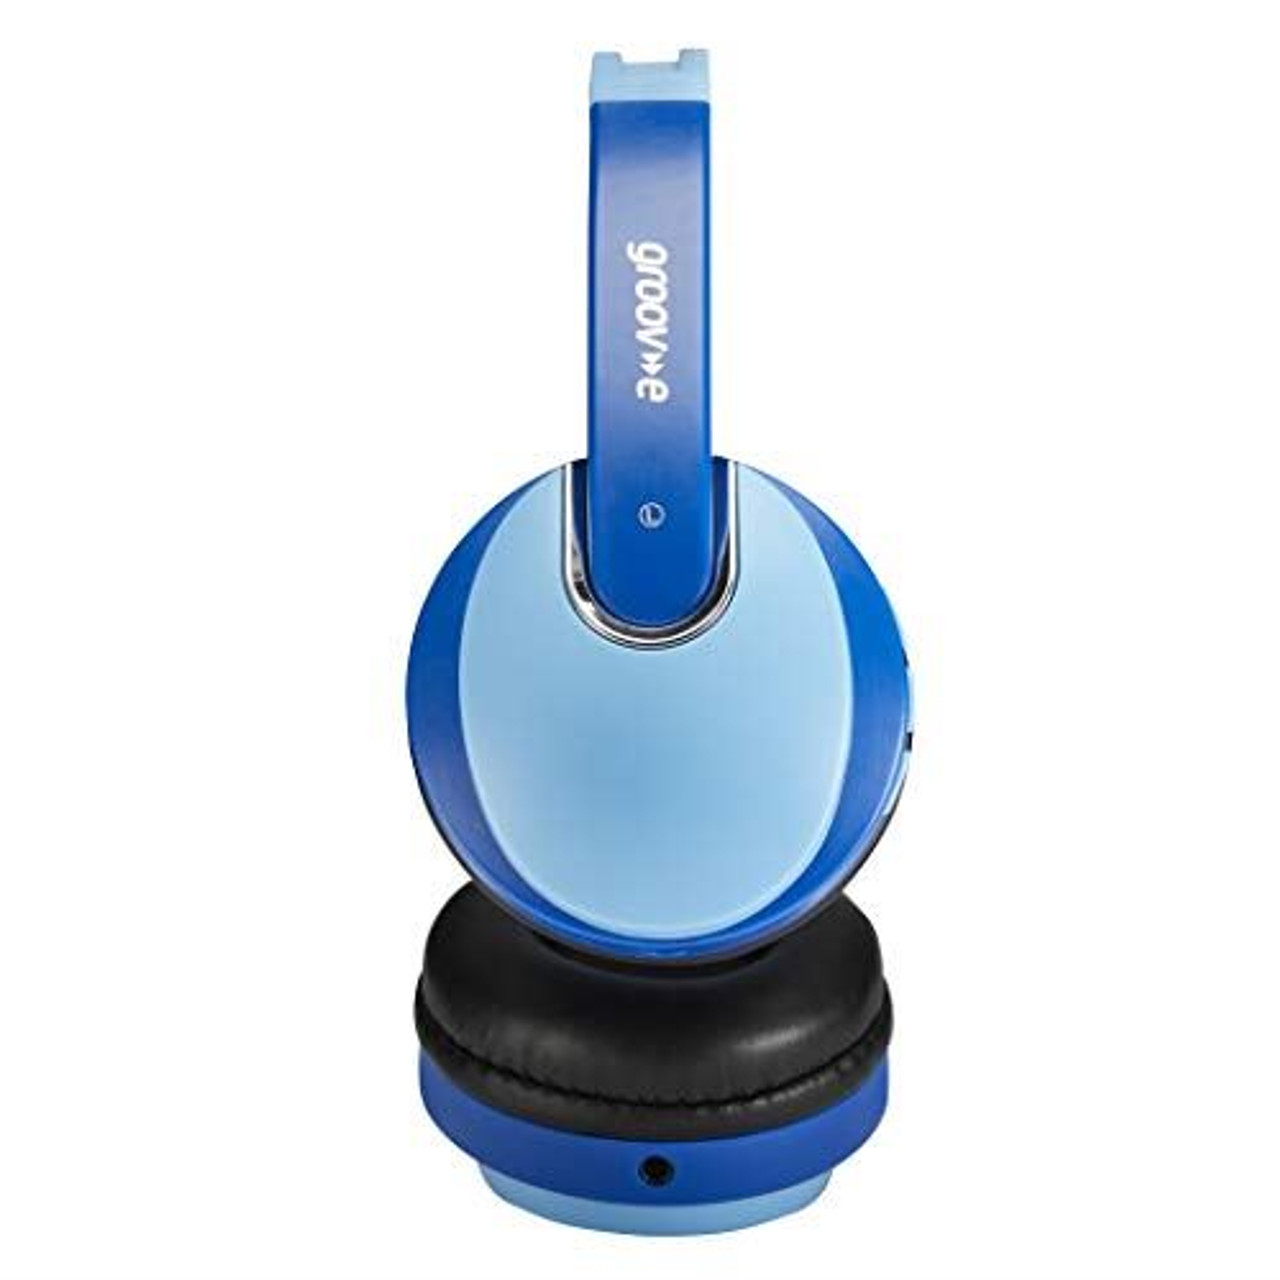 Groov-e GVBT590BE Kidz Wireless Bluetooth DJ Style Headphones - Blue